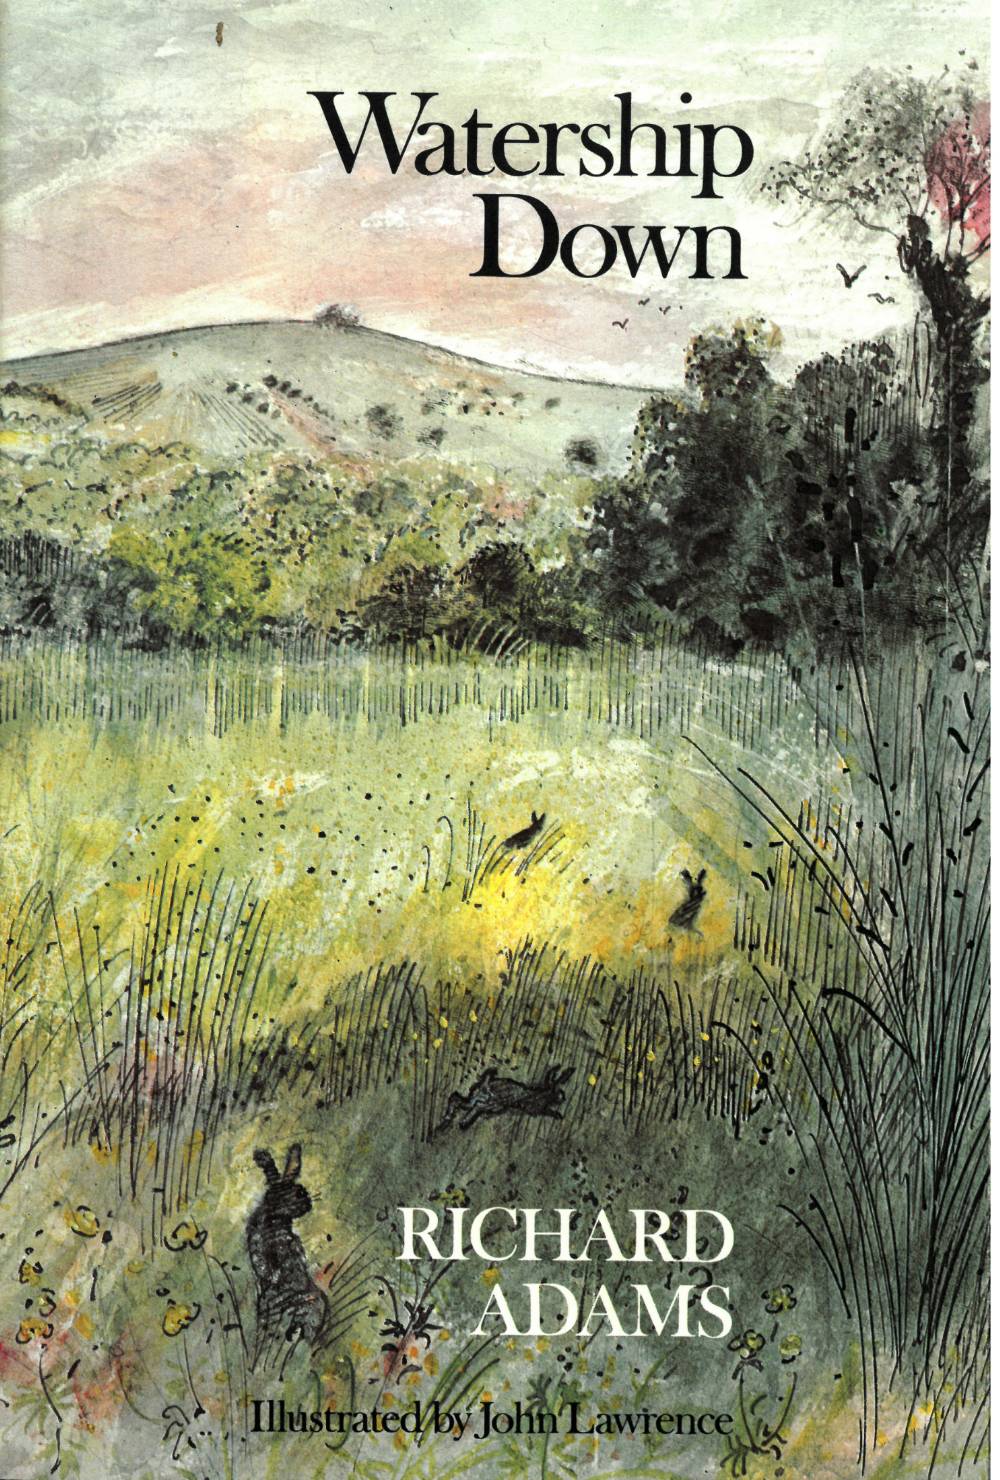 Adams (Richard) Watership Down roy 8vo Kestral Books 1976. First Illustrated Edn., illus. - Image 2 of 2